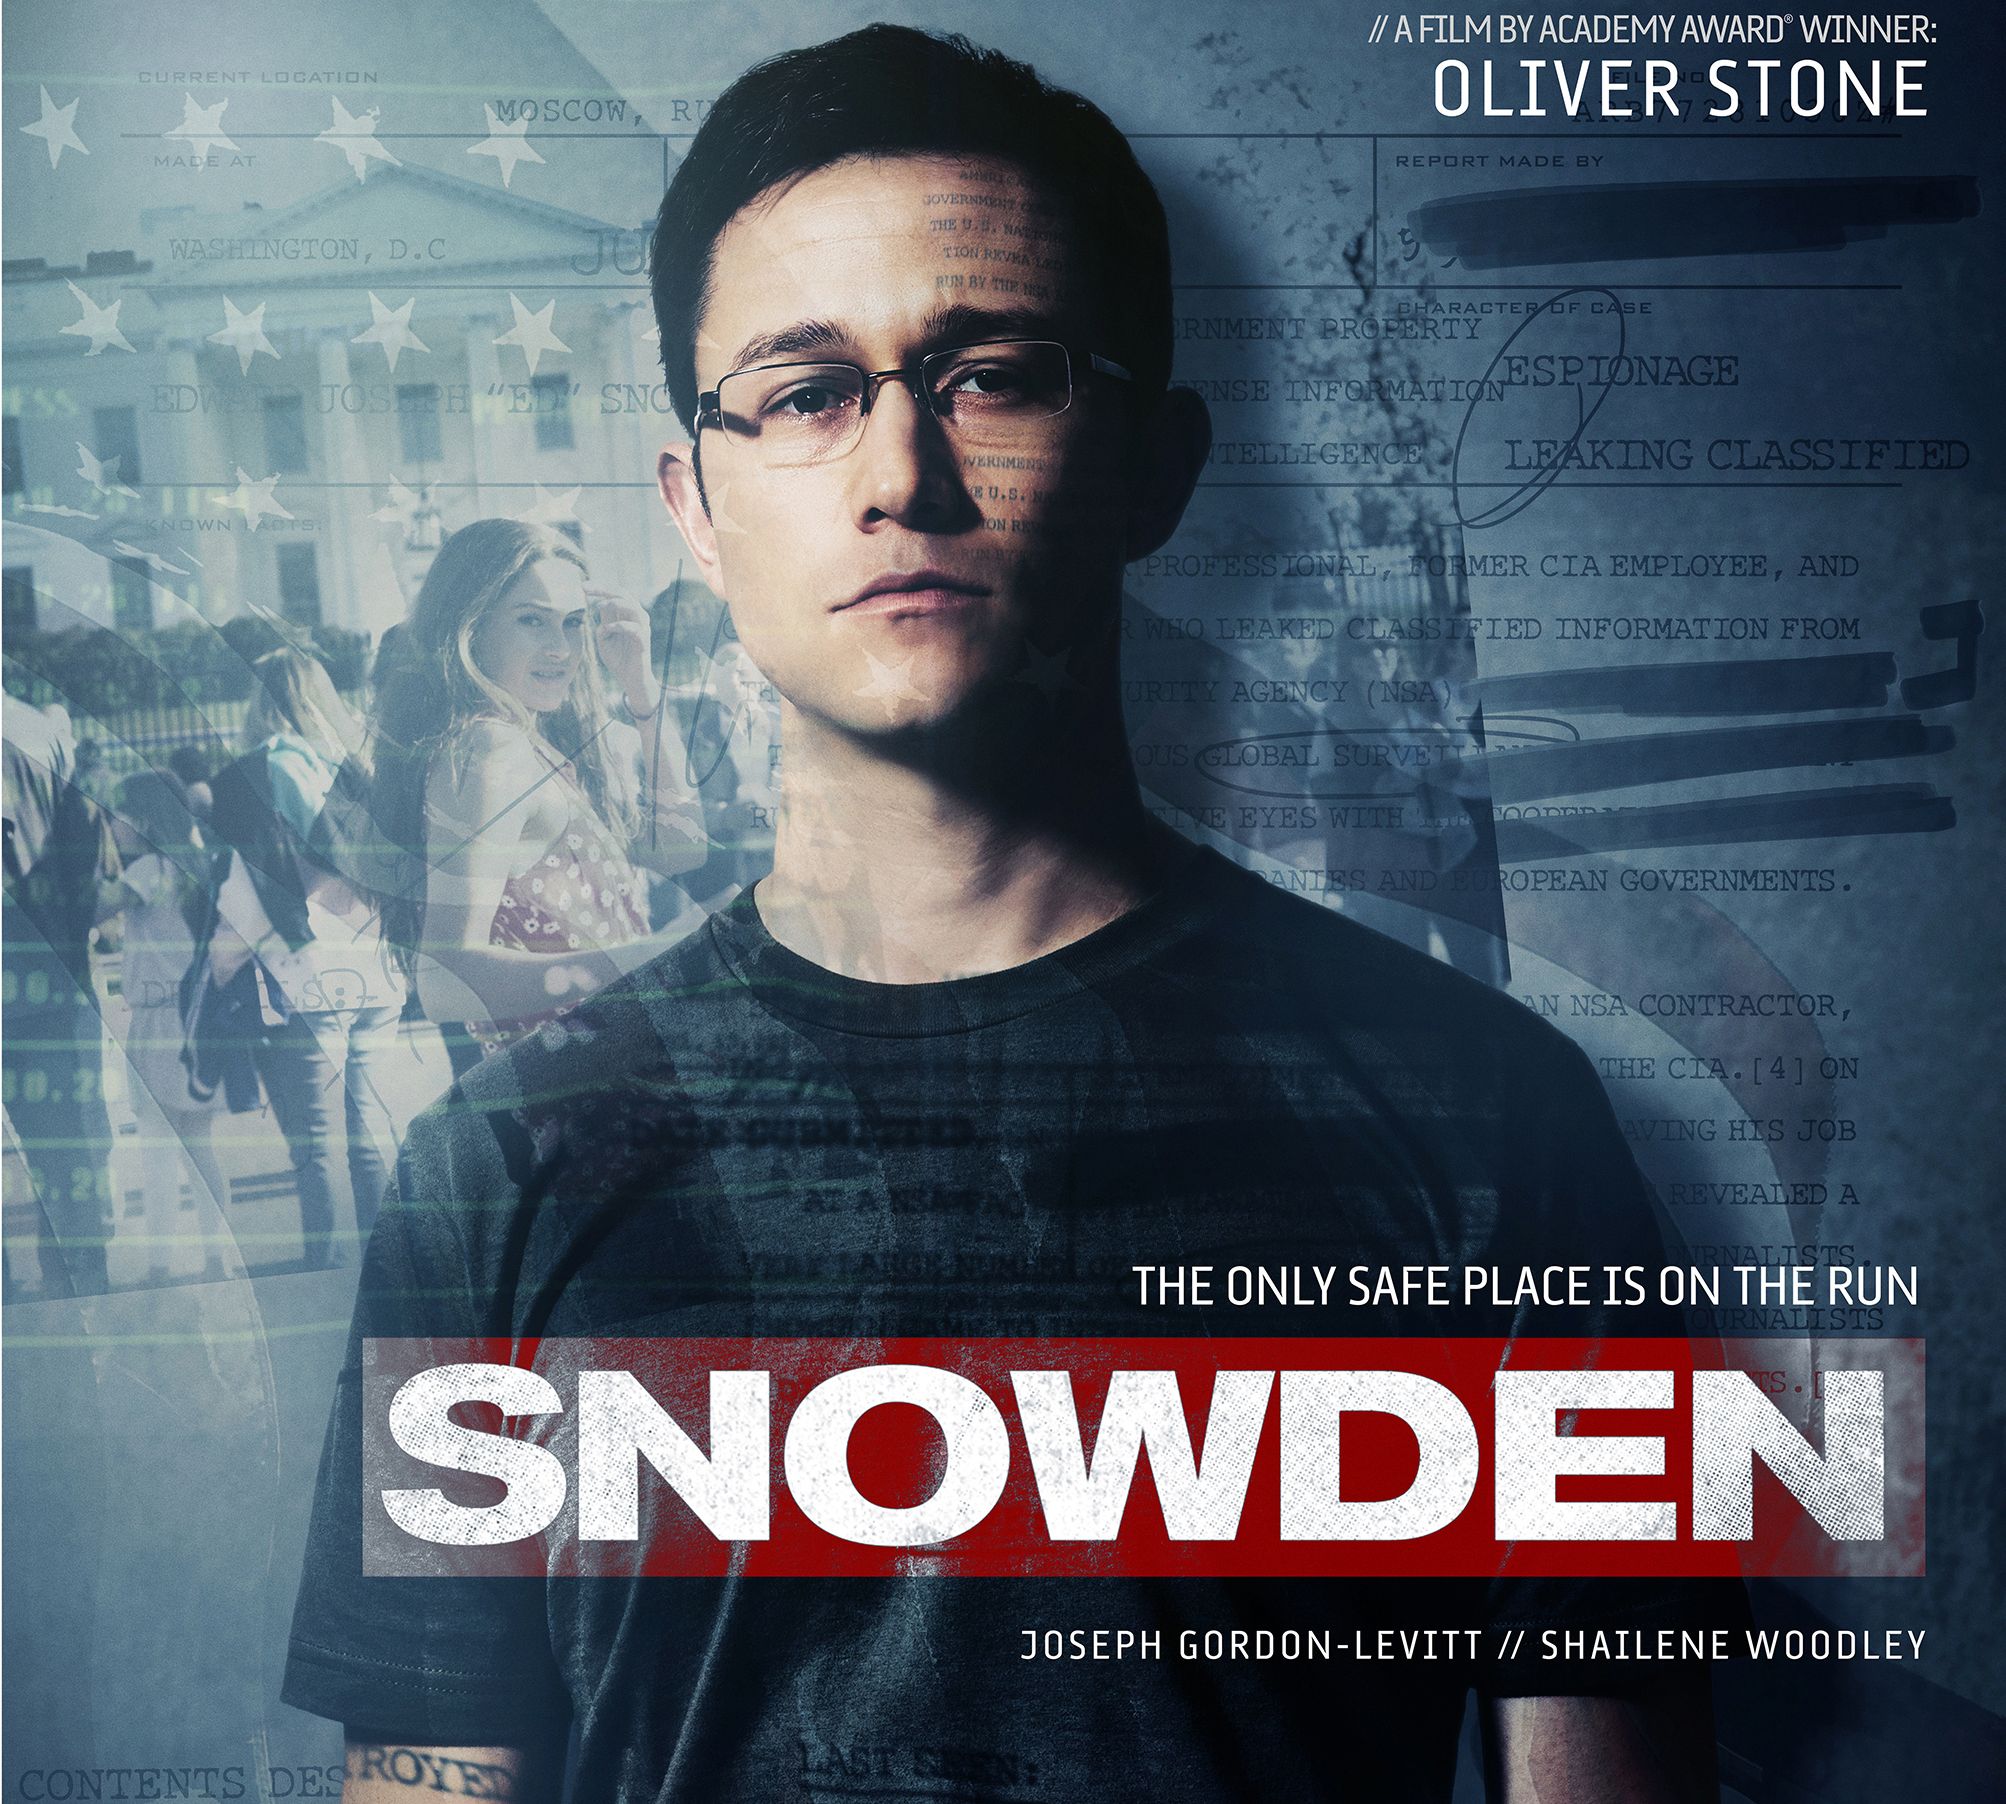 Snowden poster with Joseph Gordon-Levitt